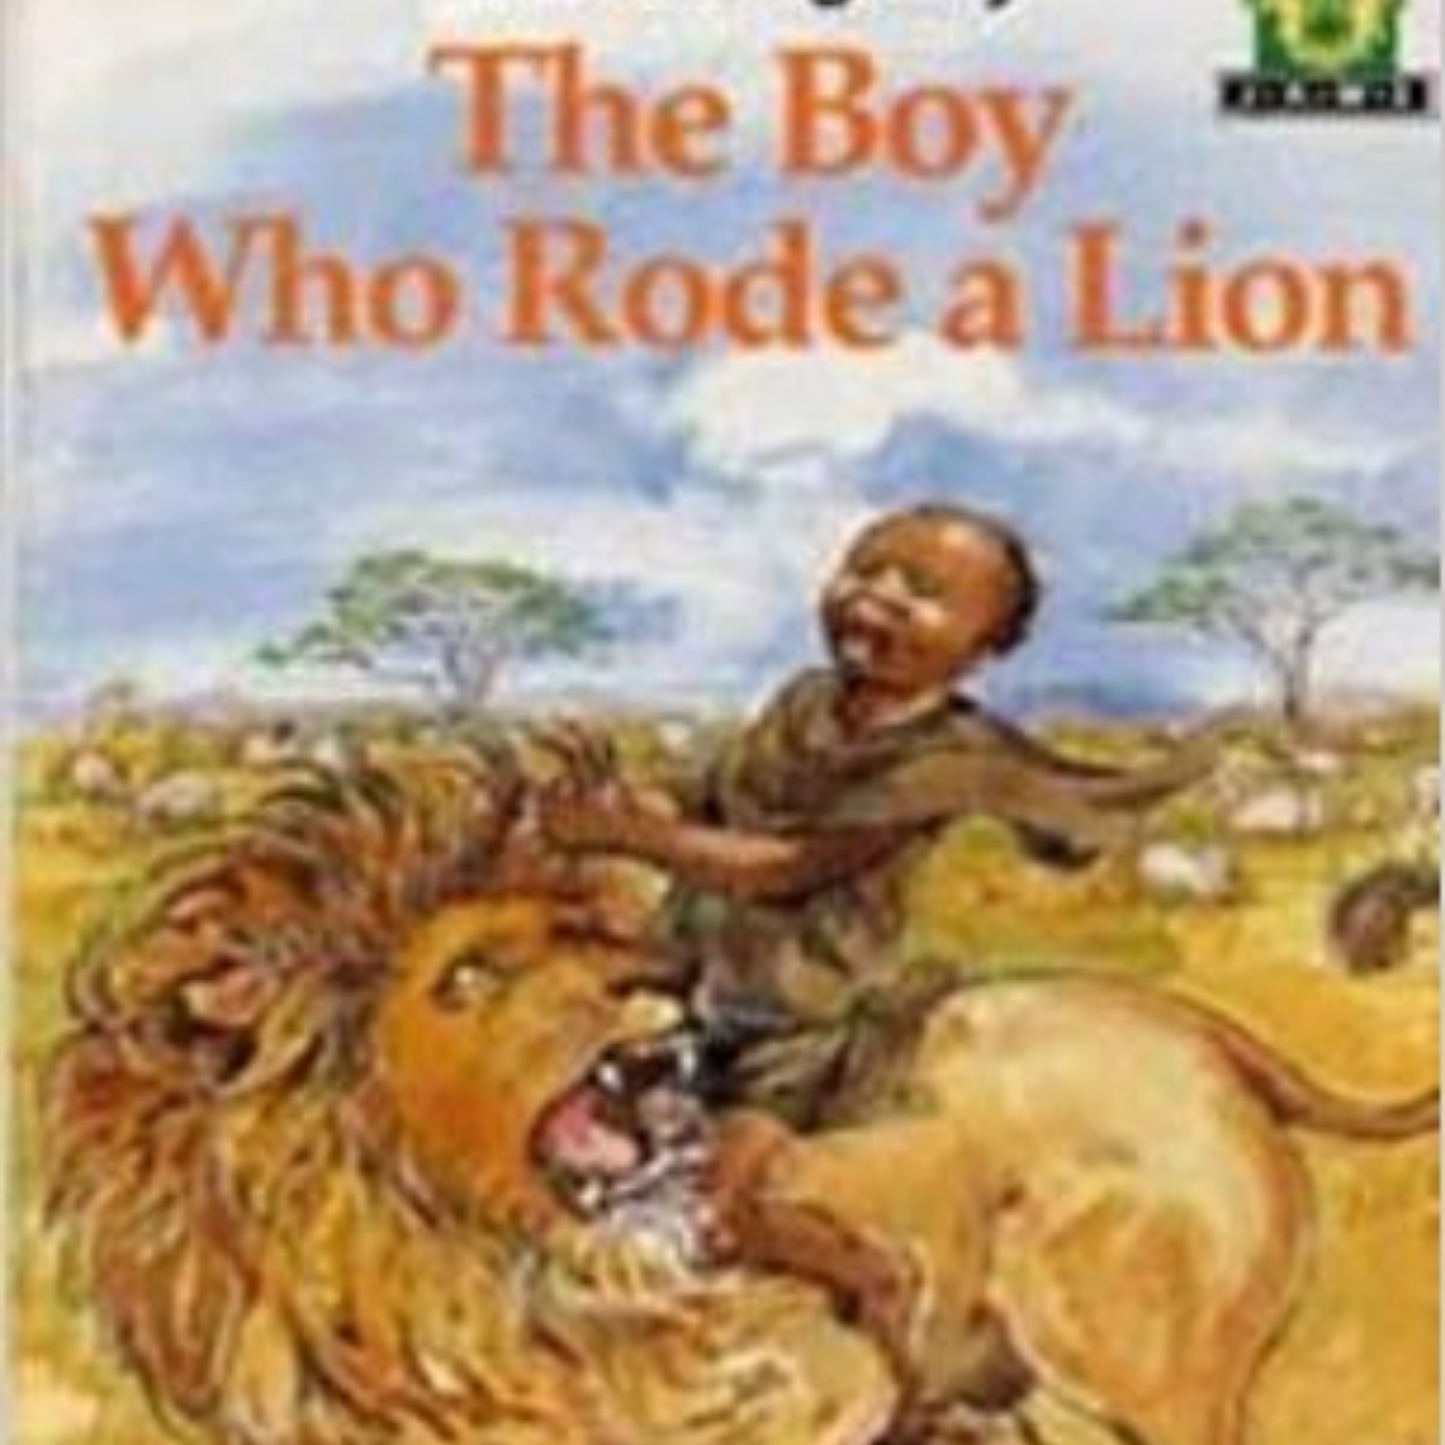 The boy who rode a Lion